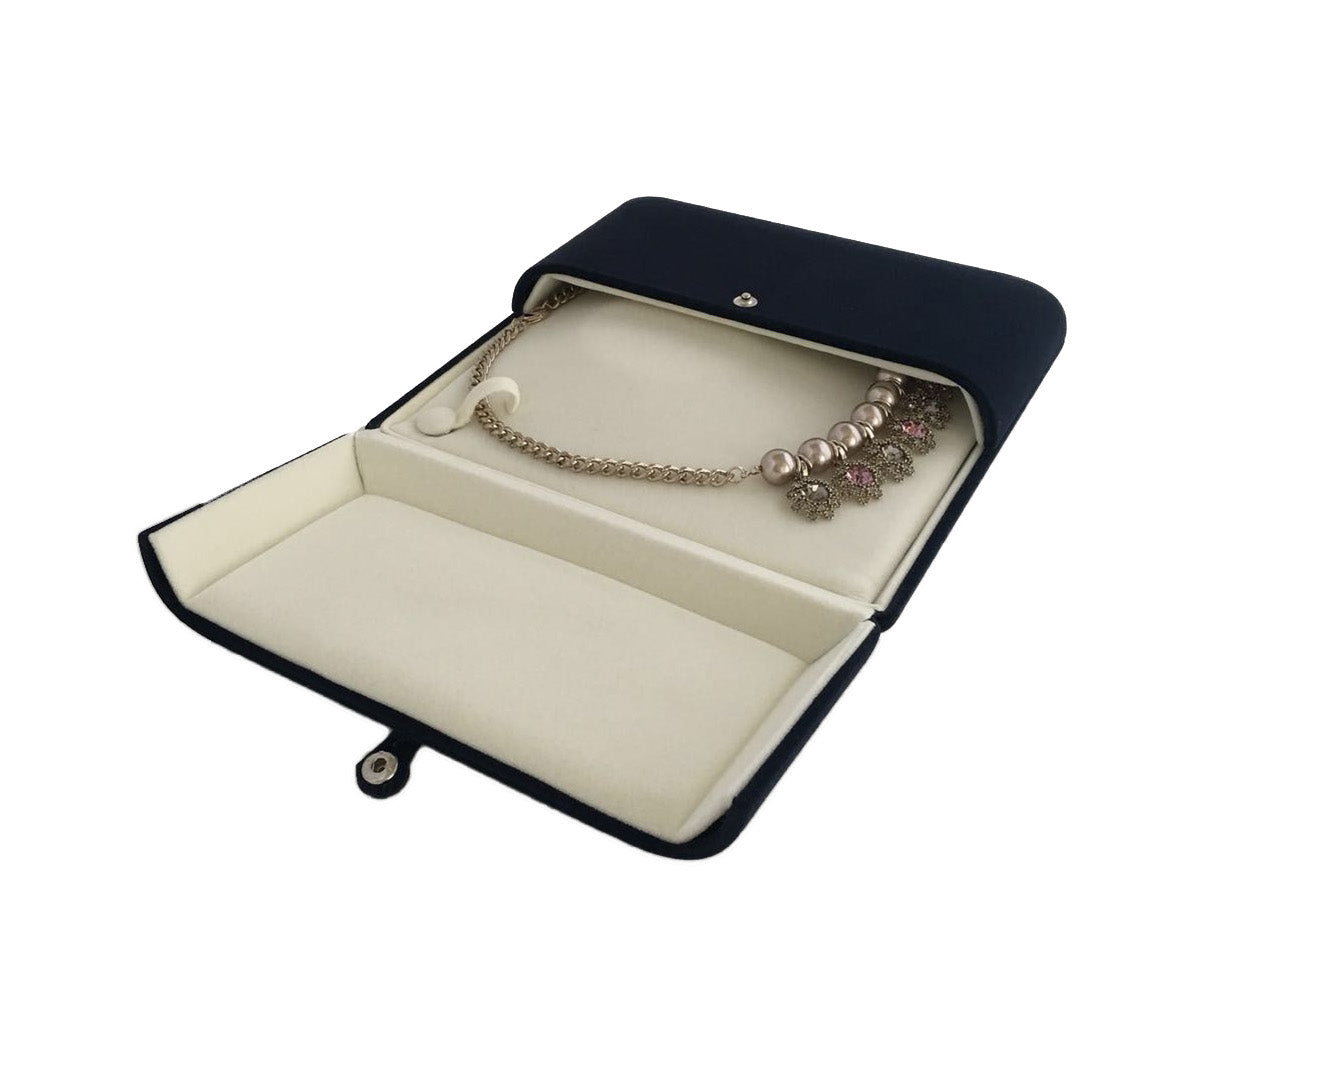 necklace box jewelry jewelry gift box| Alibaba.com